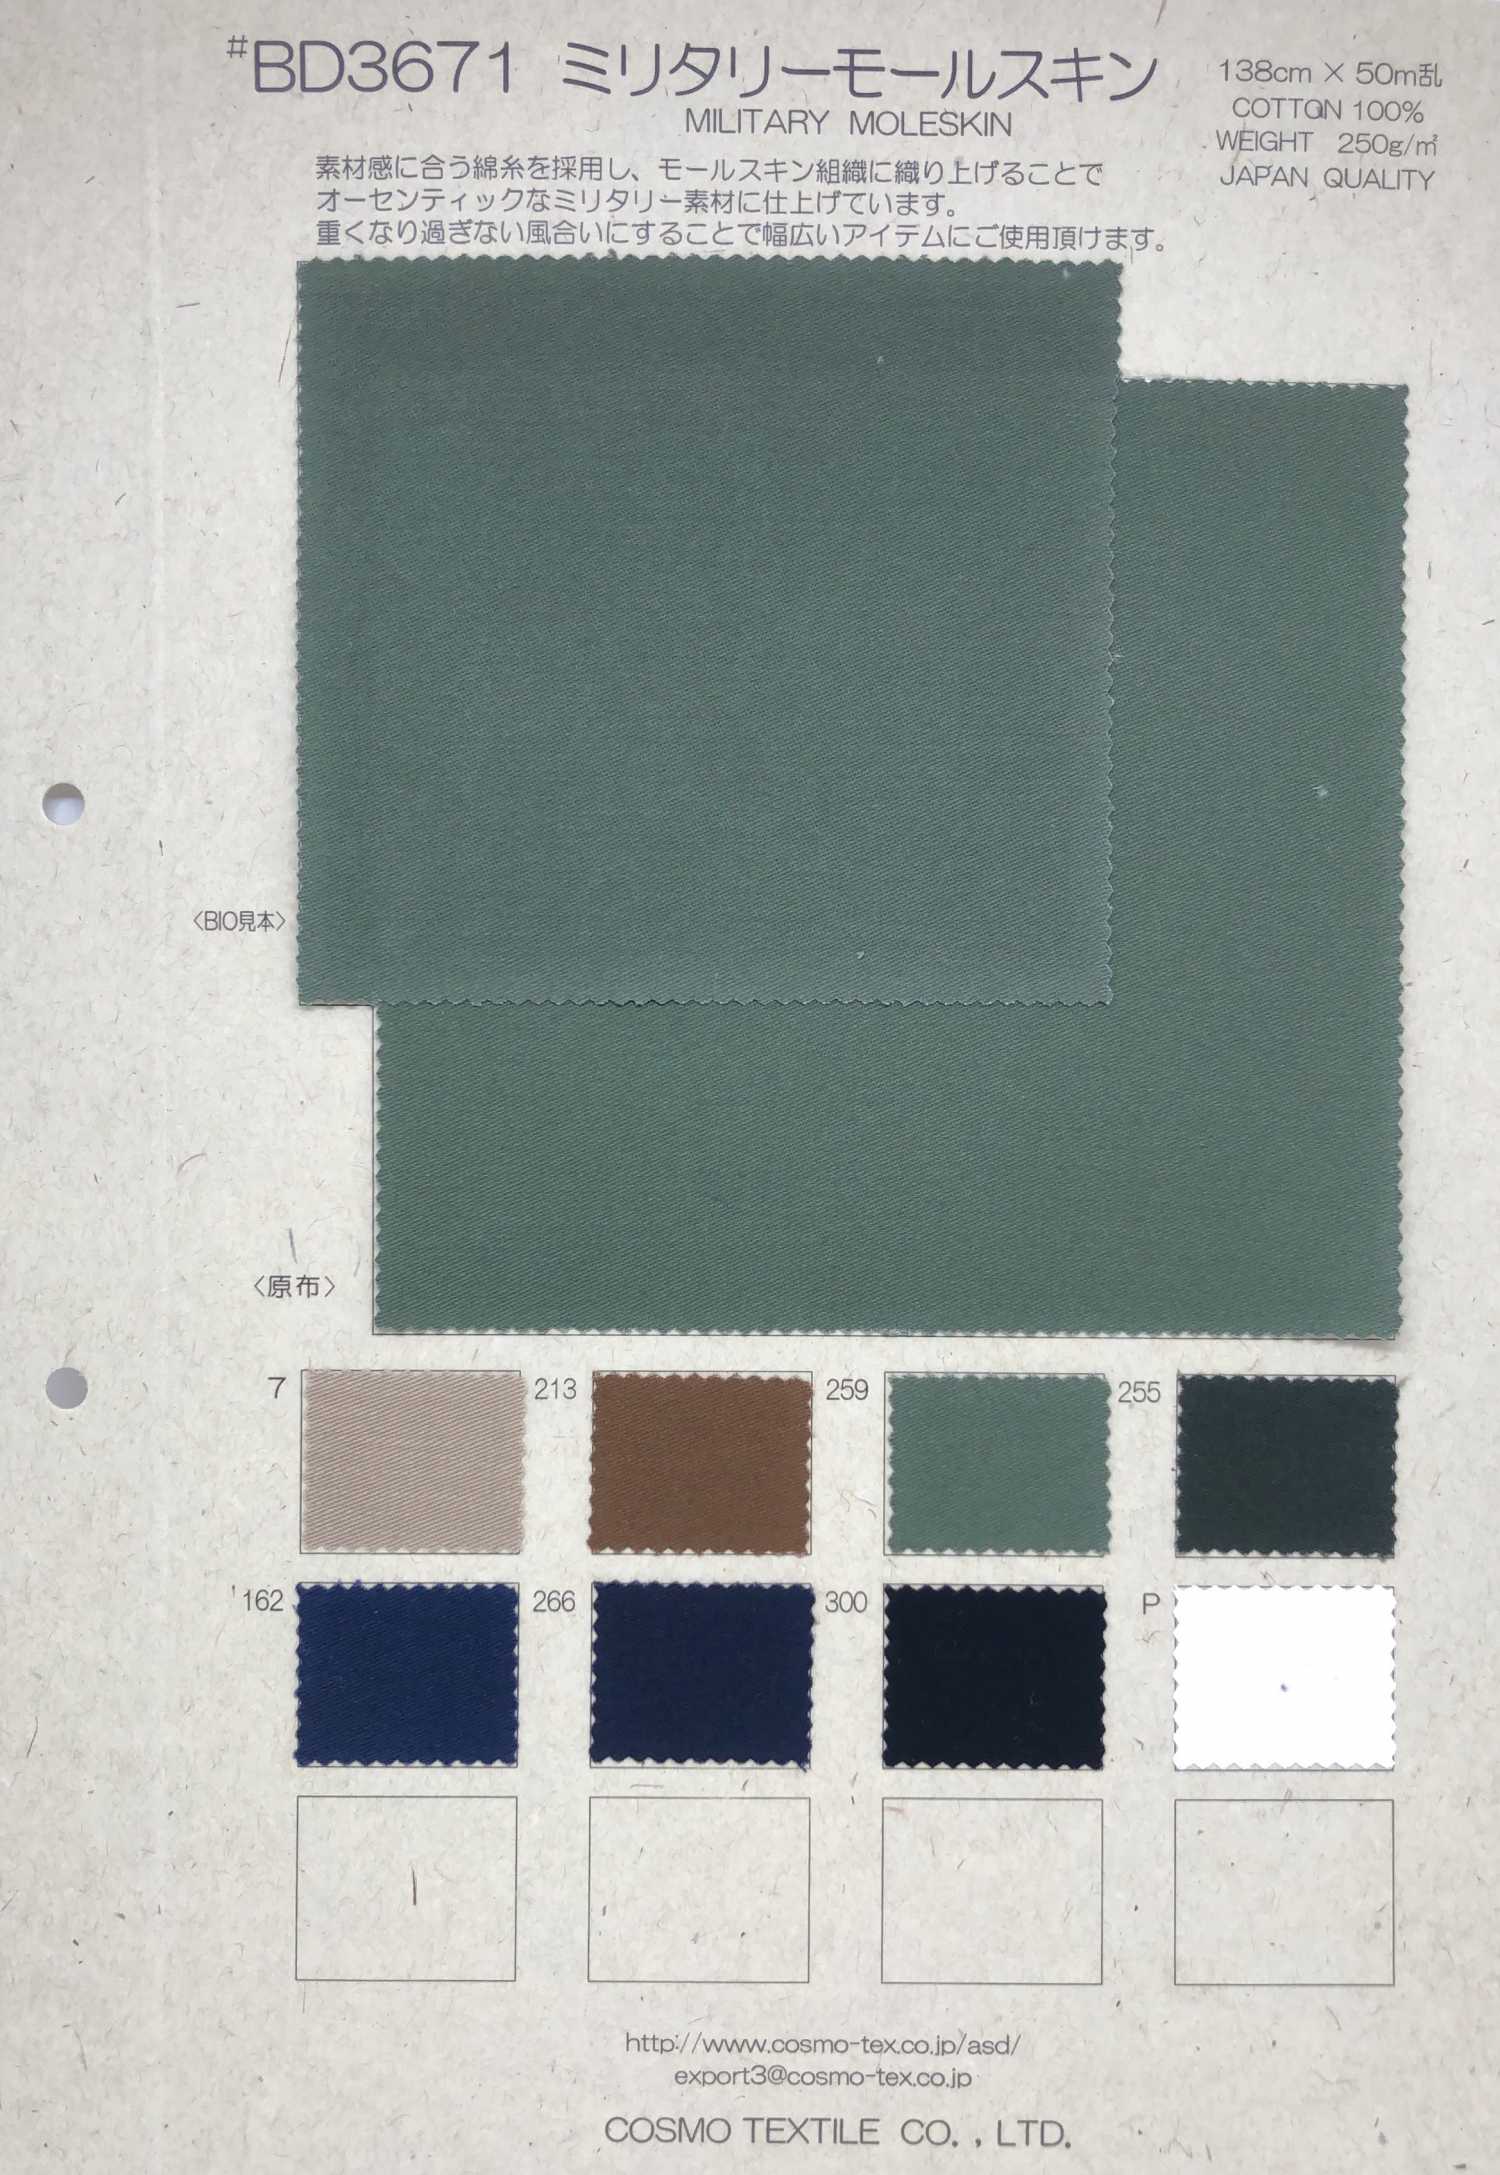 BD3671 Military Moleskin[Textile / Fabric] COSMO TEXTILE